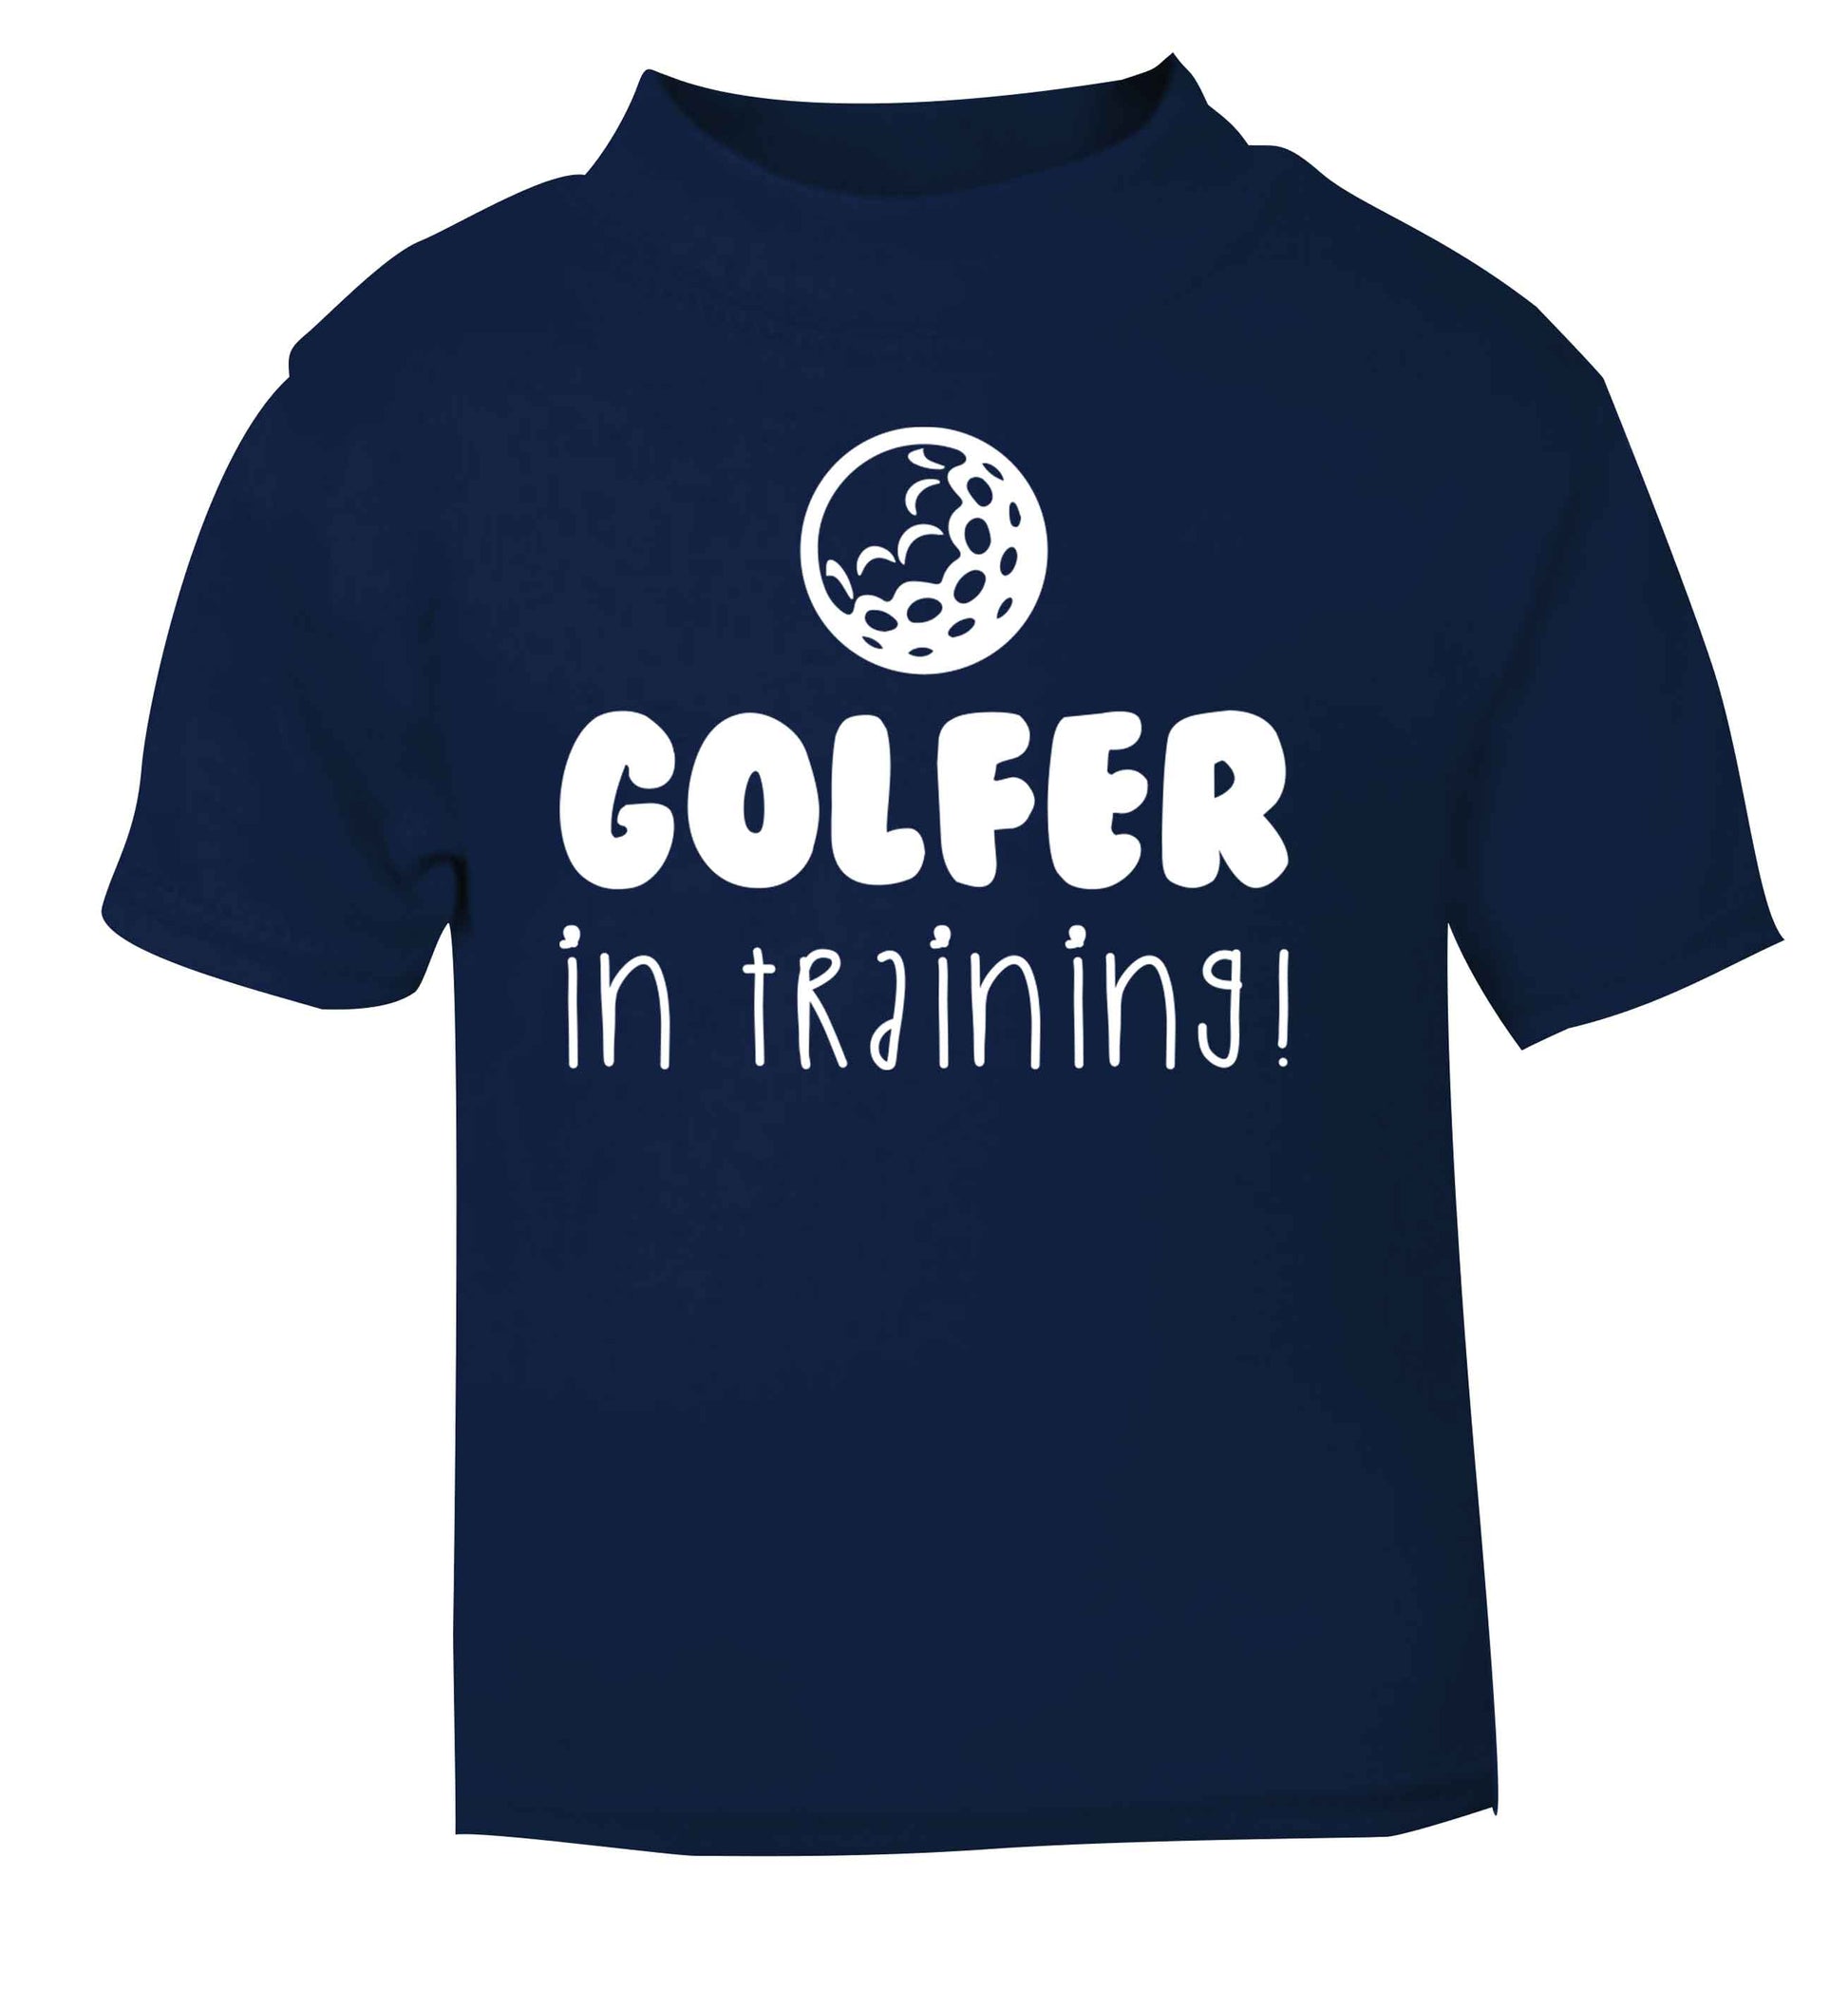 Golfer in training navy Baby Toddler Tshirt 2 Years